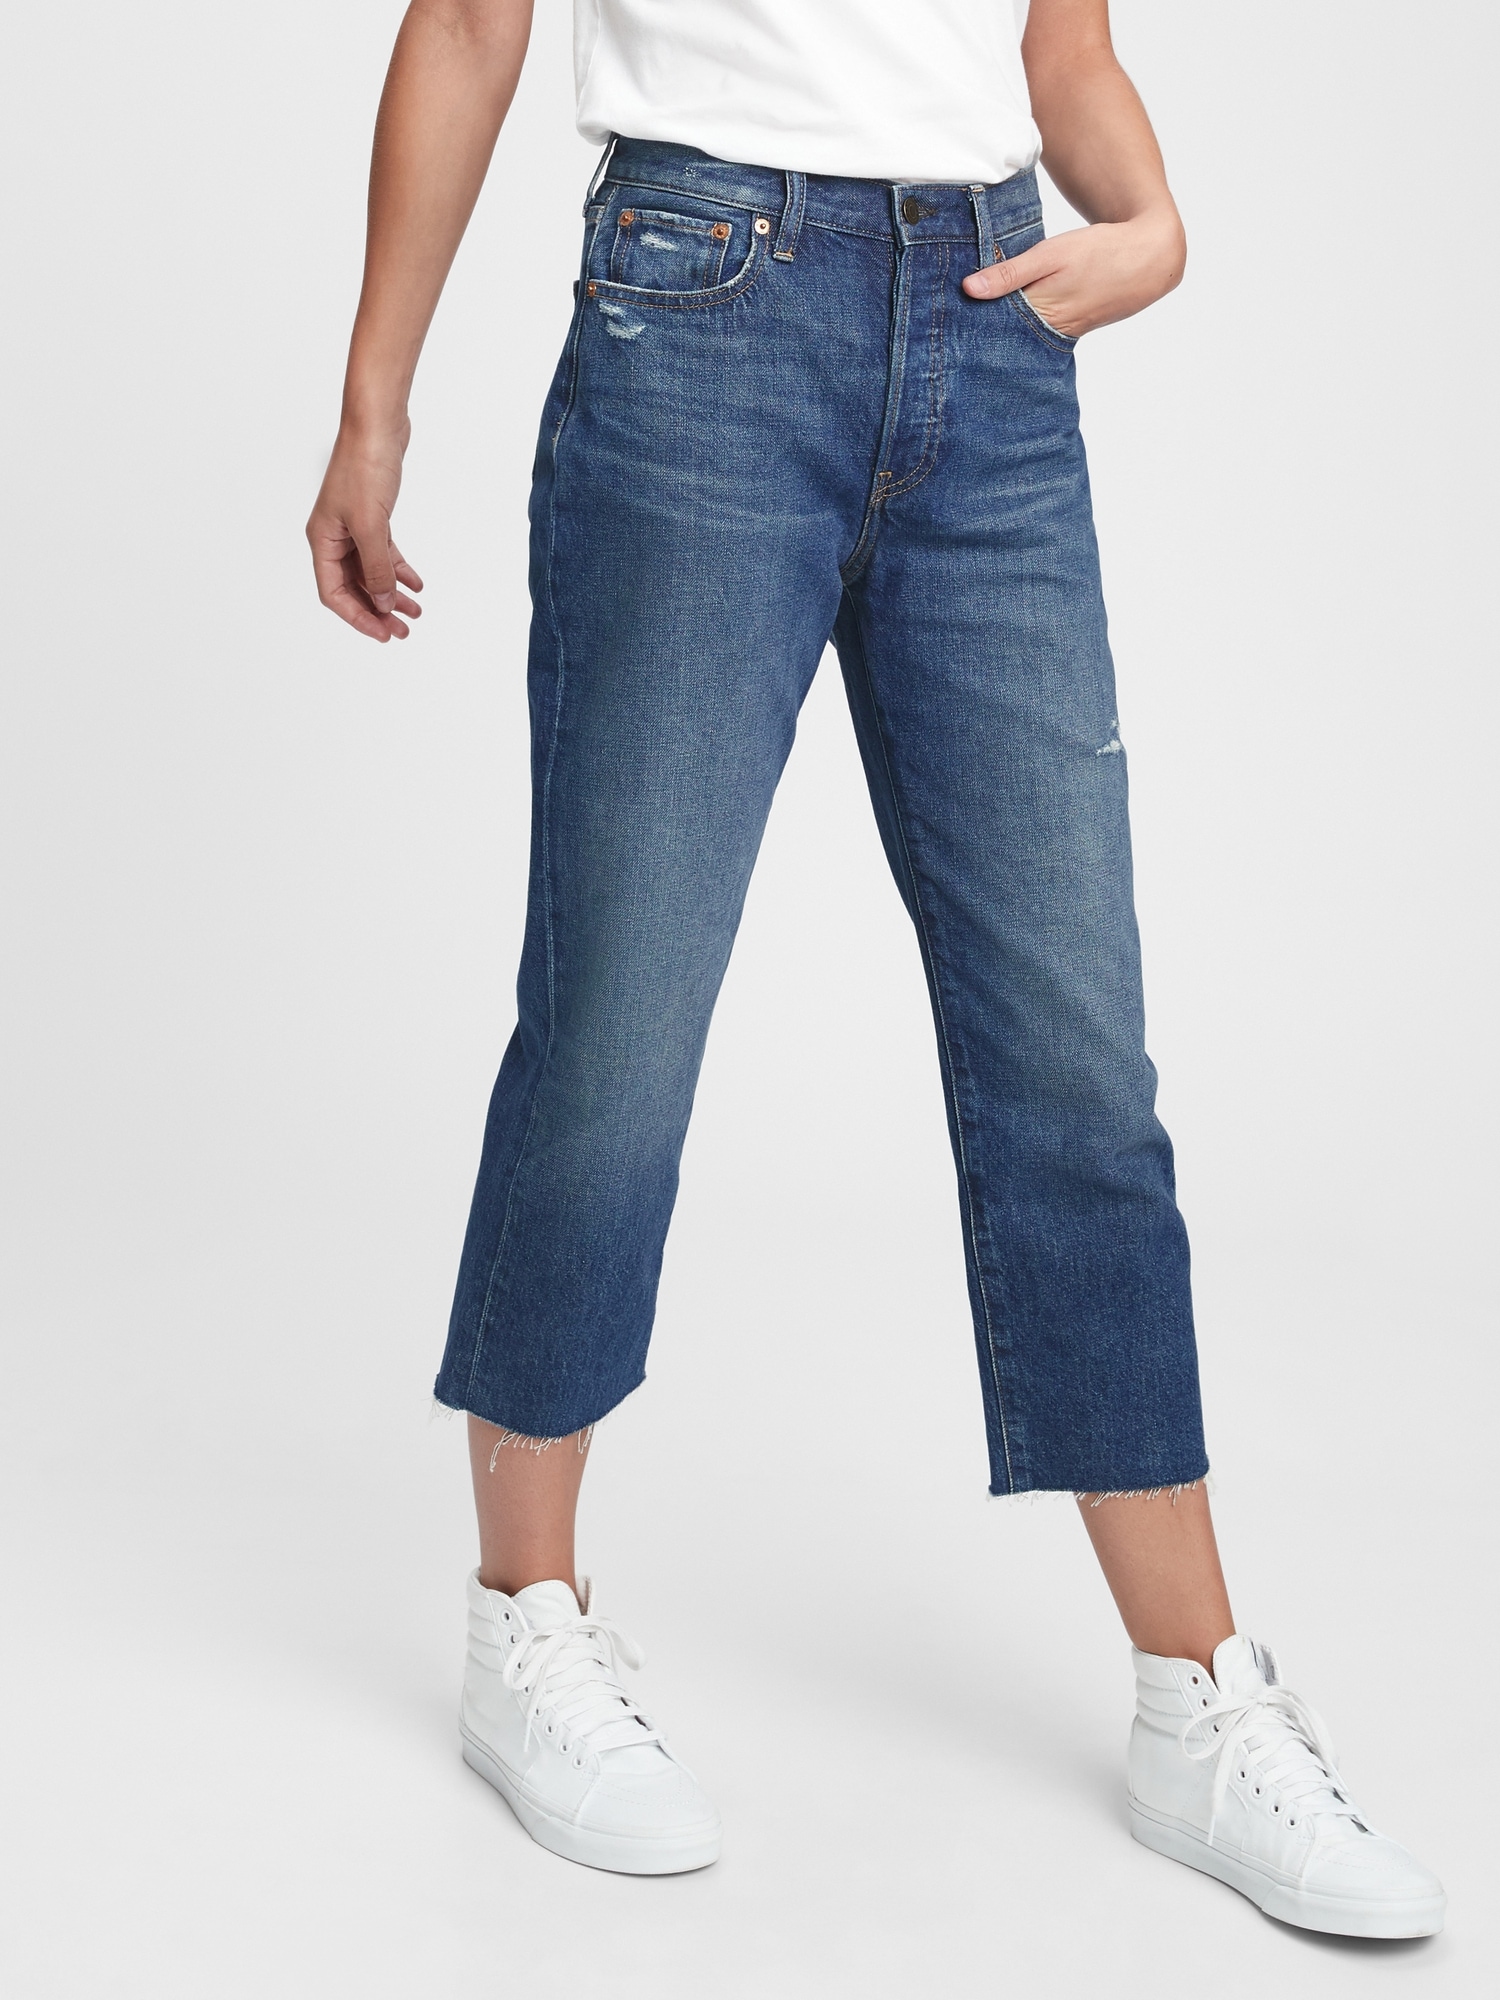 gap non stretch jeans